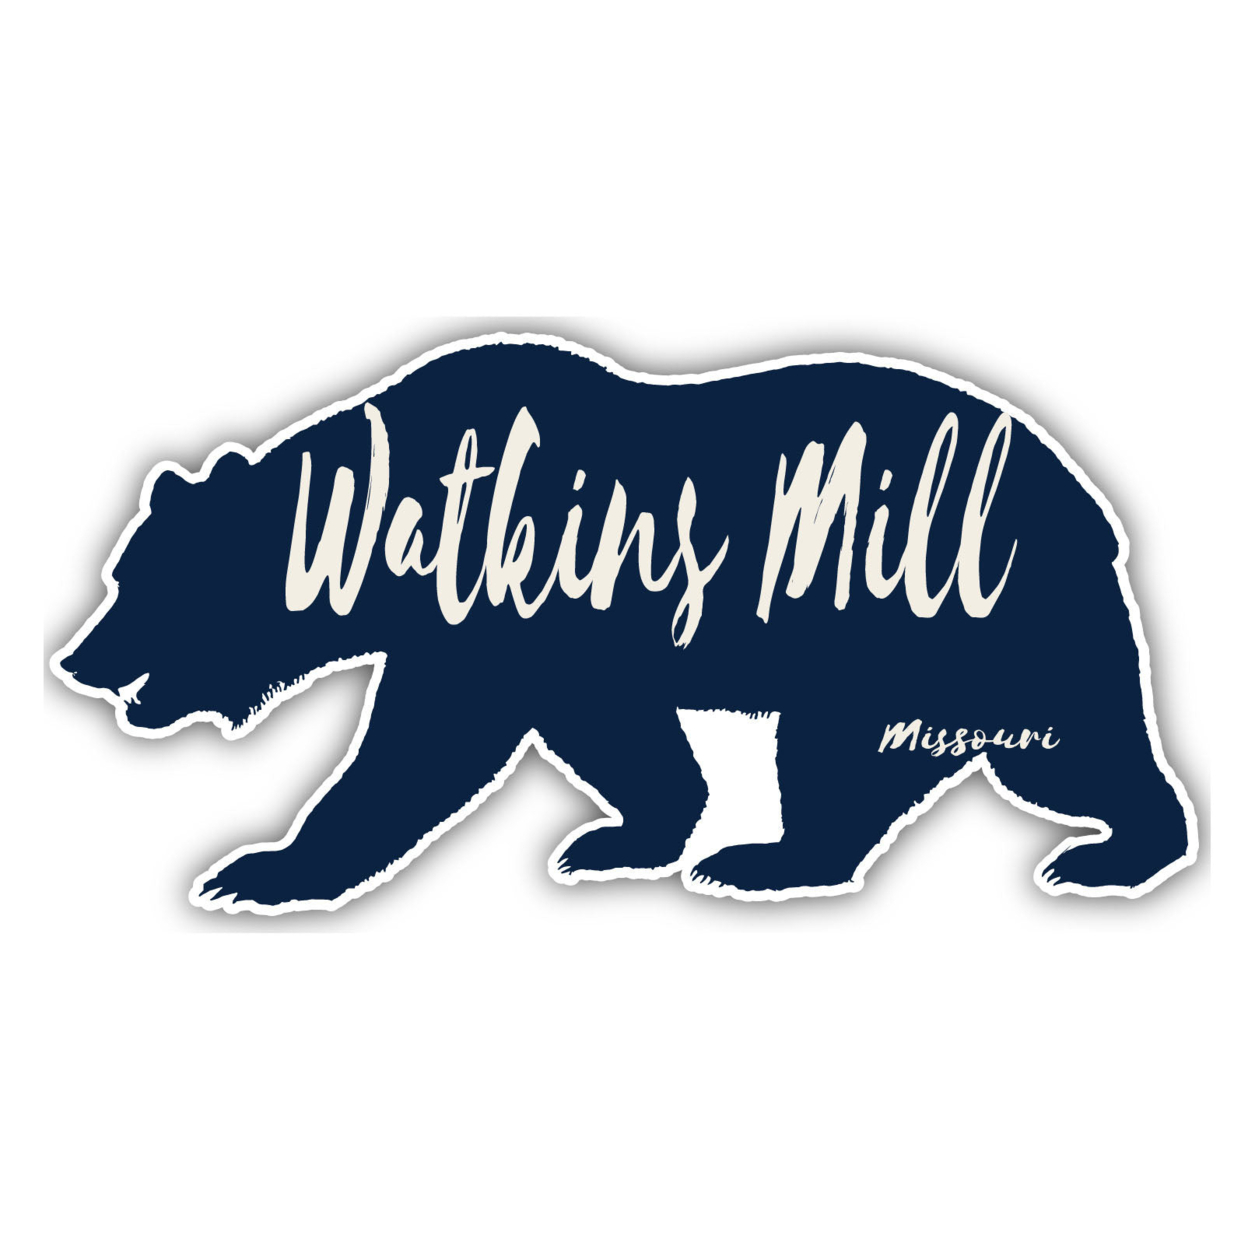 Watkins Mill Missouri Souvenir Decorative Stickers (Choose Theme And Size) - Single Unit, 2-Inch, Bear